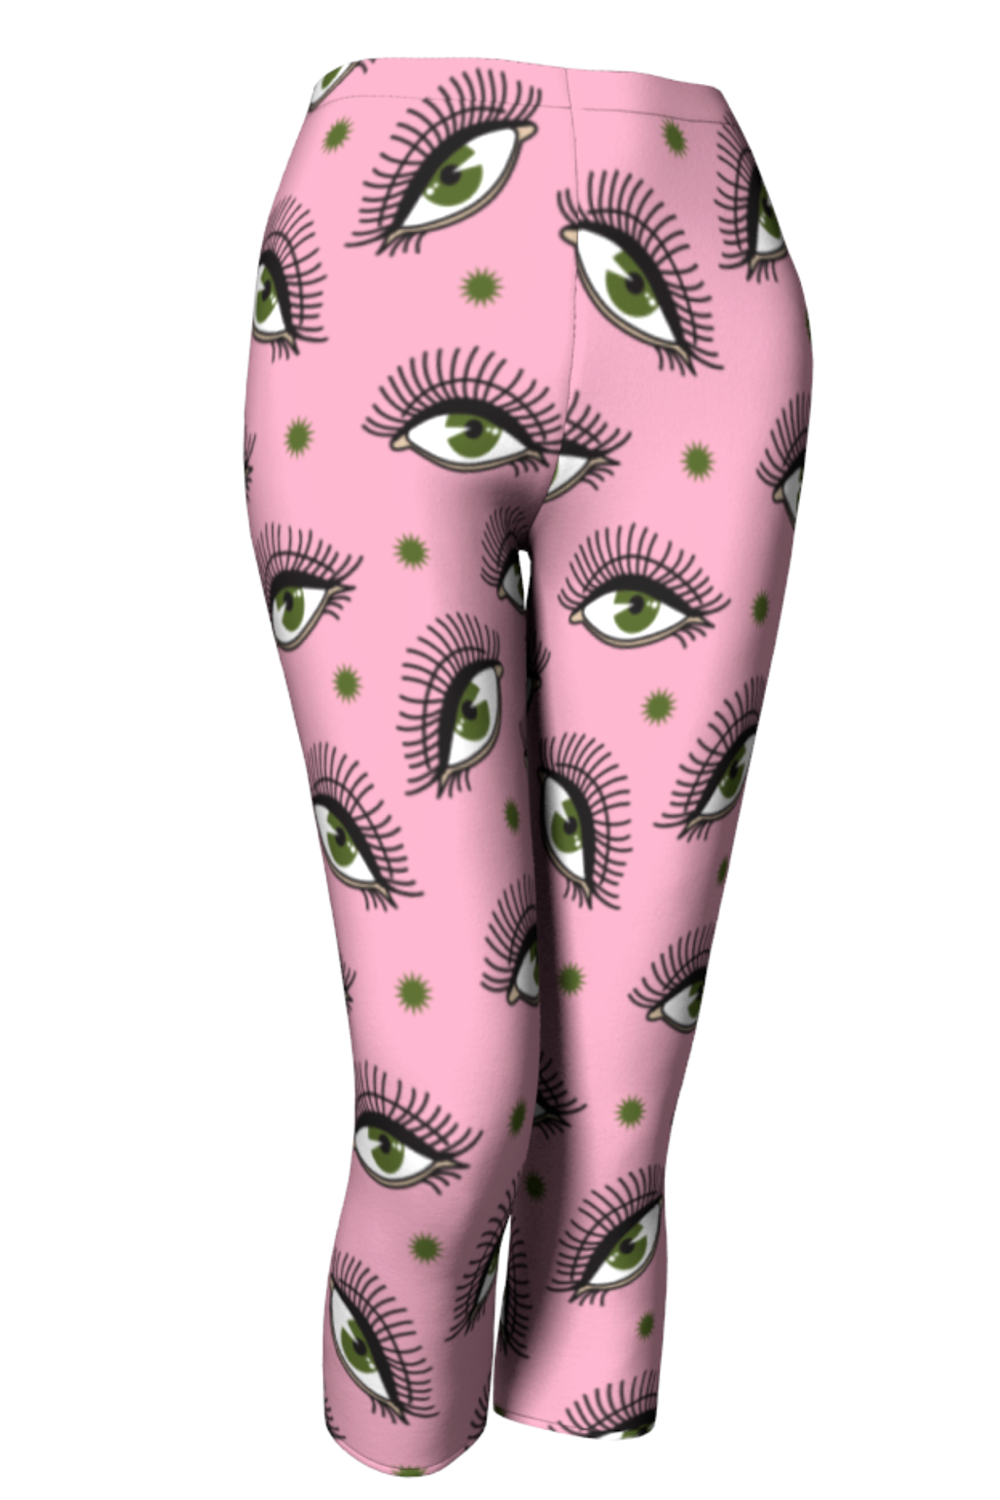 Eye See You Pink Capris Workout Leggings - The Oblong Box Shop